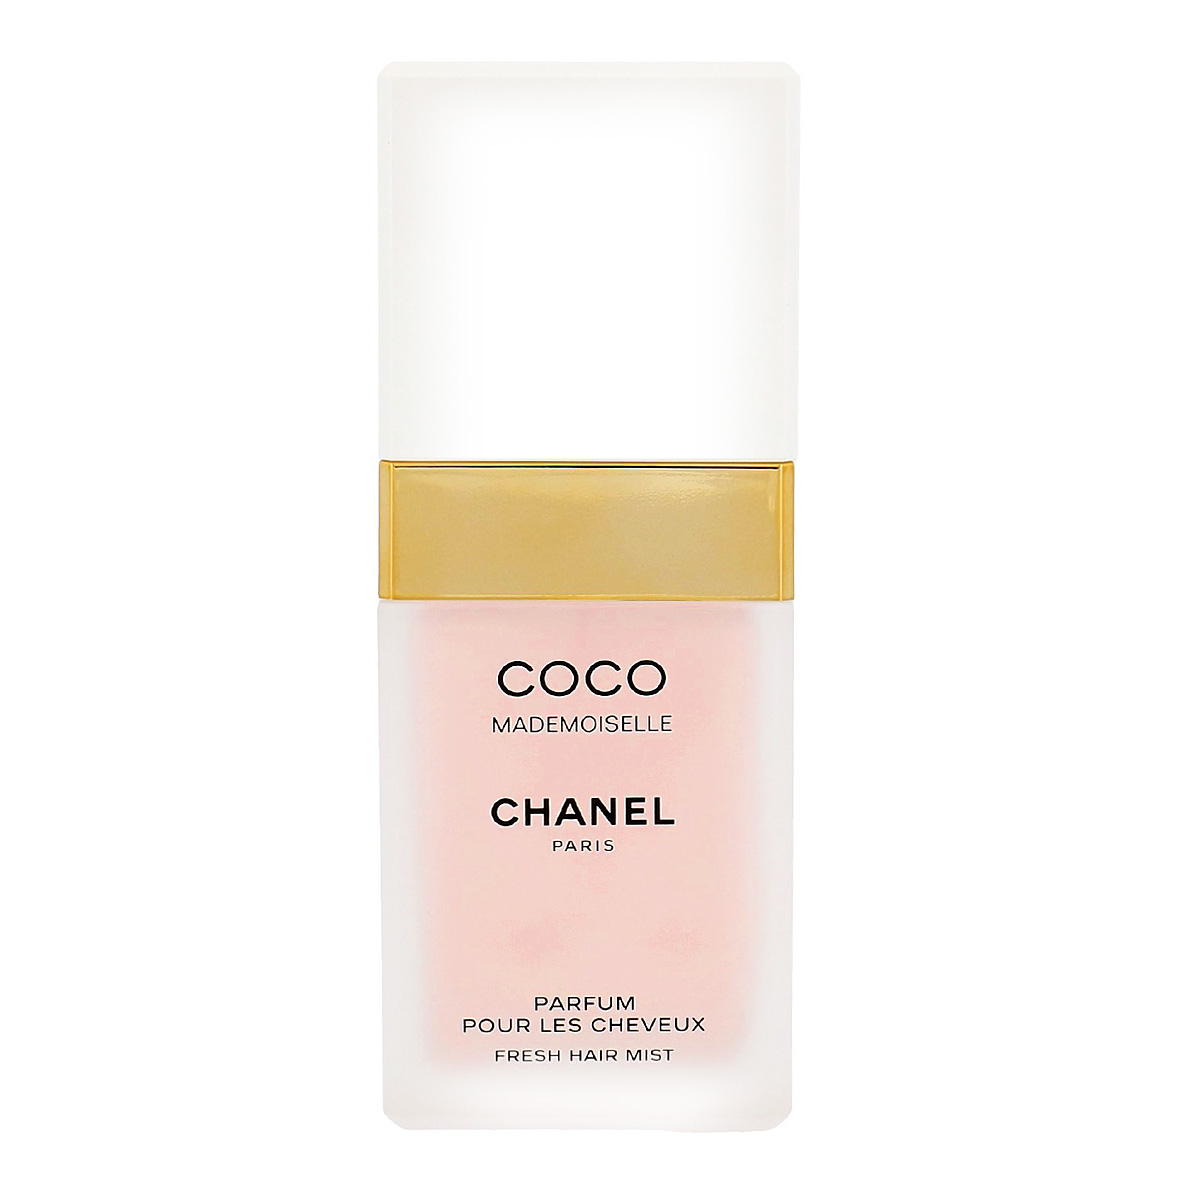 Mariner Tjen Goodwill Chanel Coco Mademoiselle Parfum Fresh Hair Mist Sale, SAVE 53%.